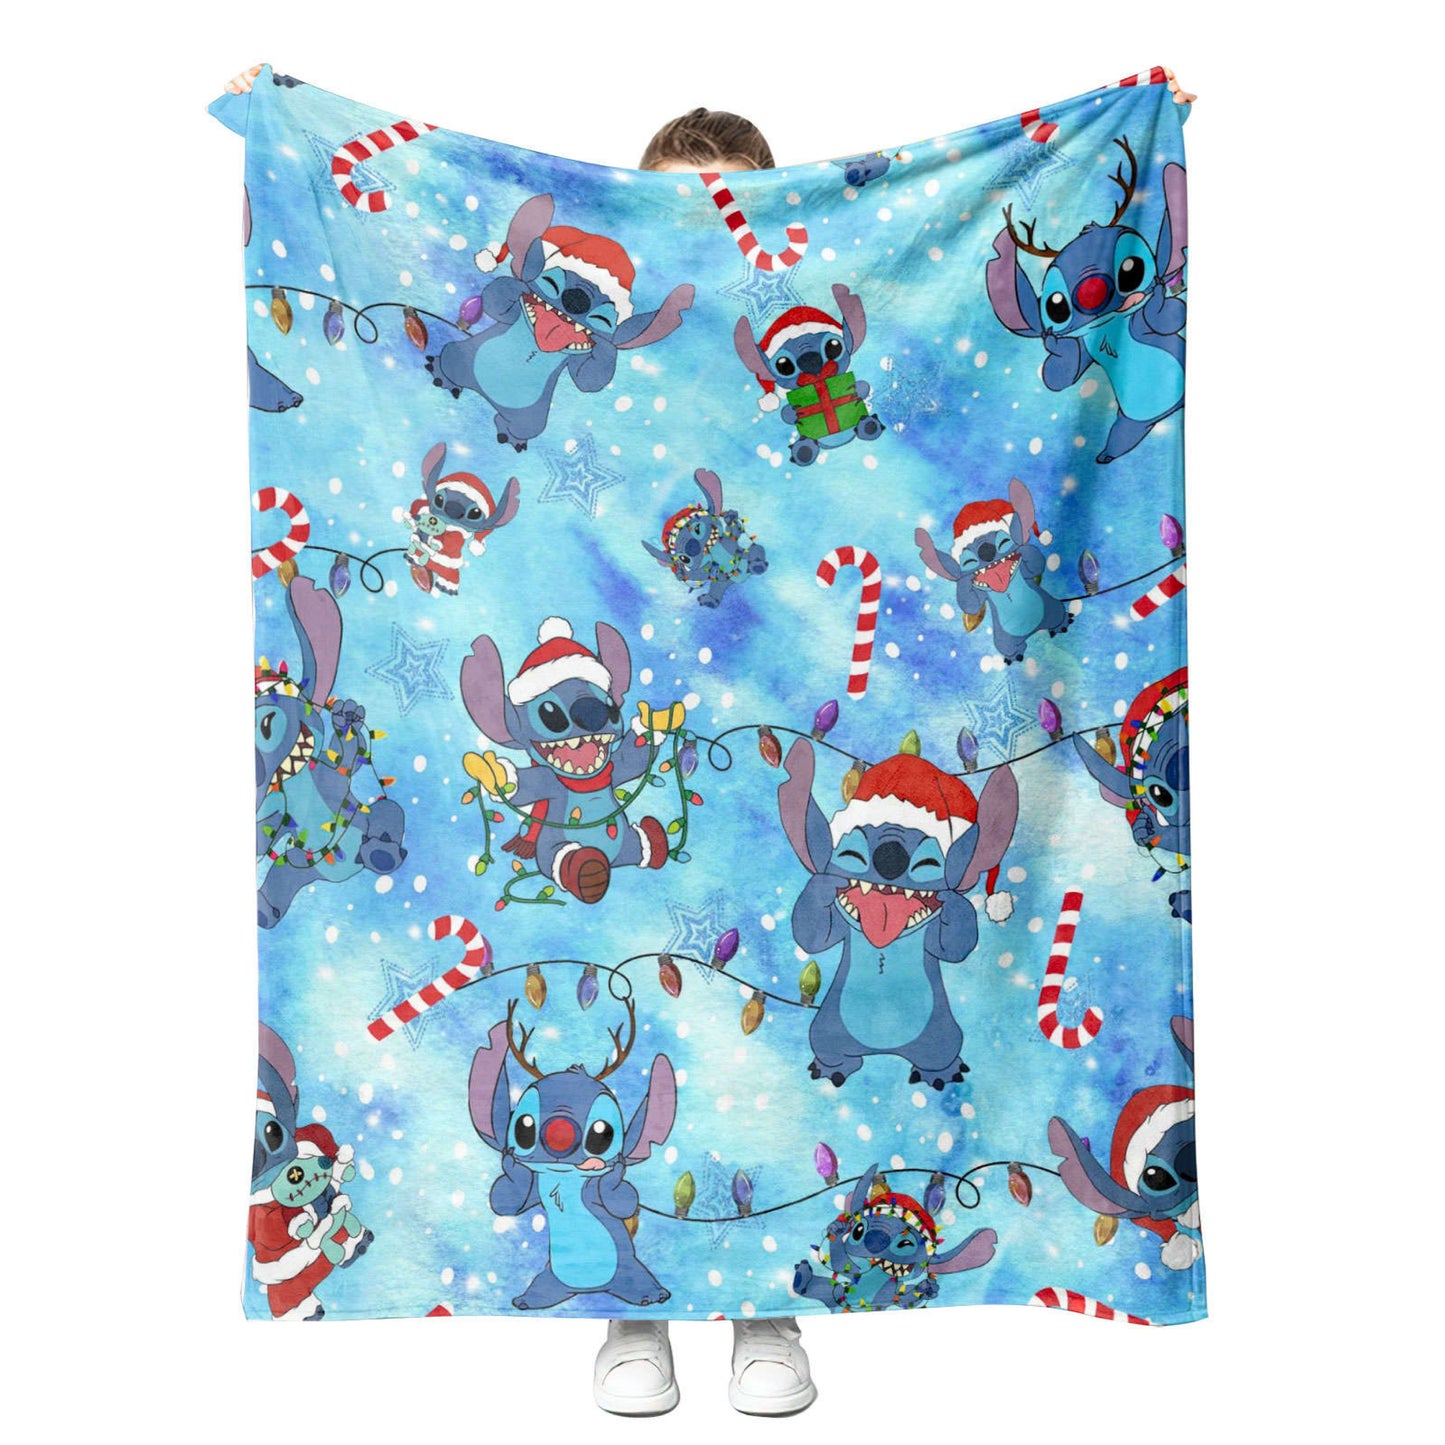 Stitch Xmas blanket